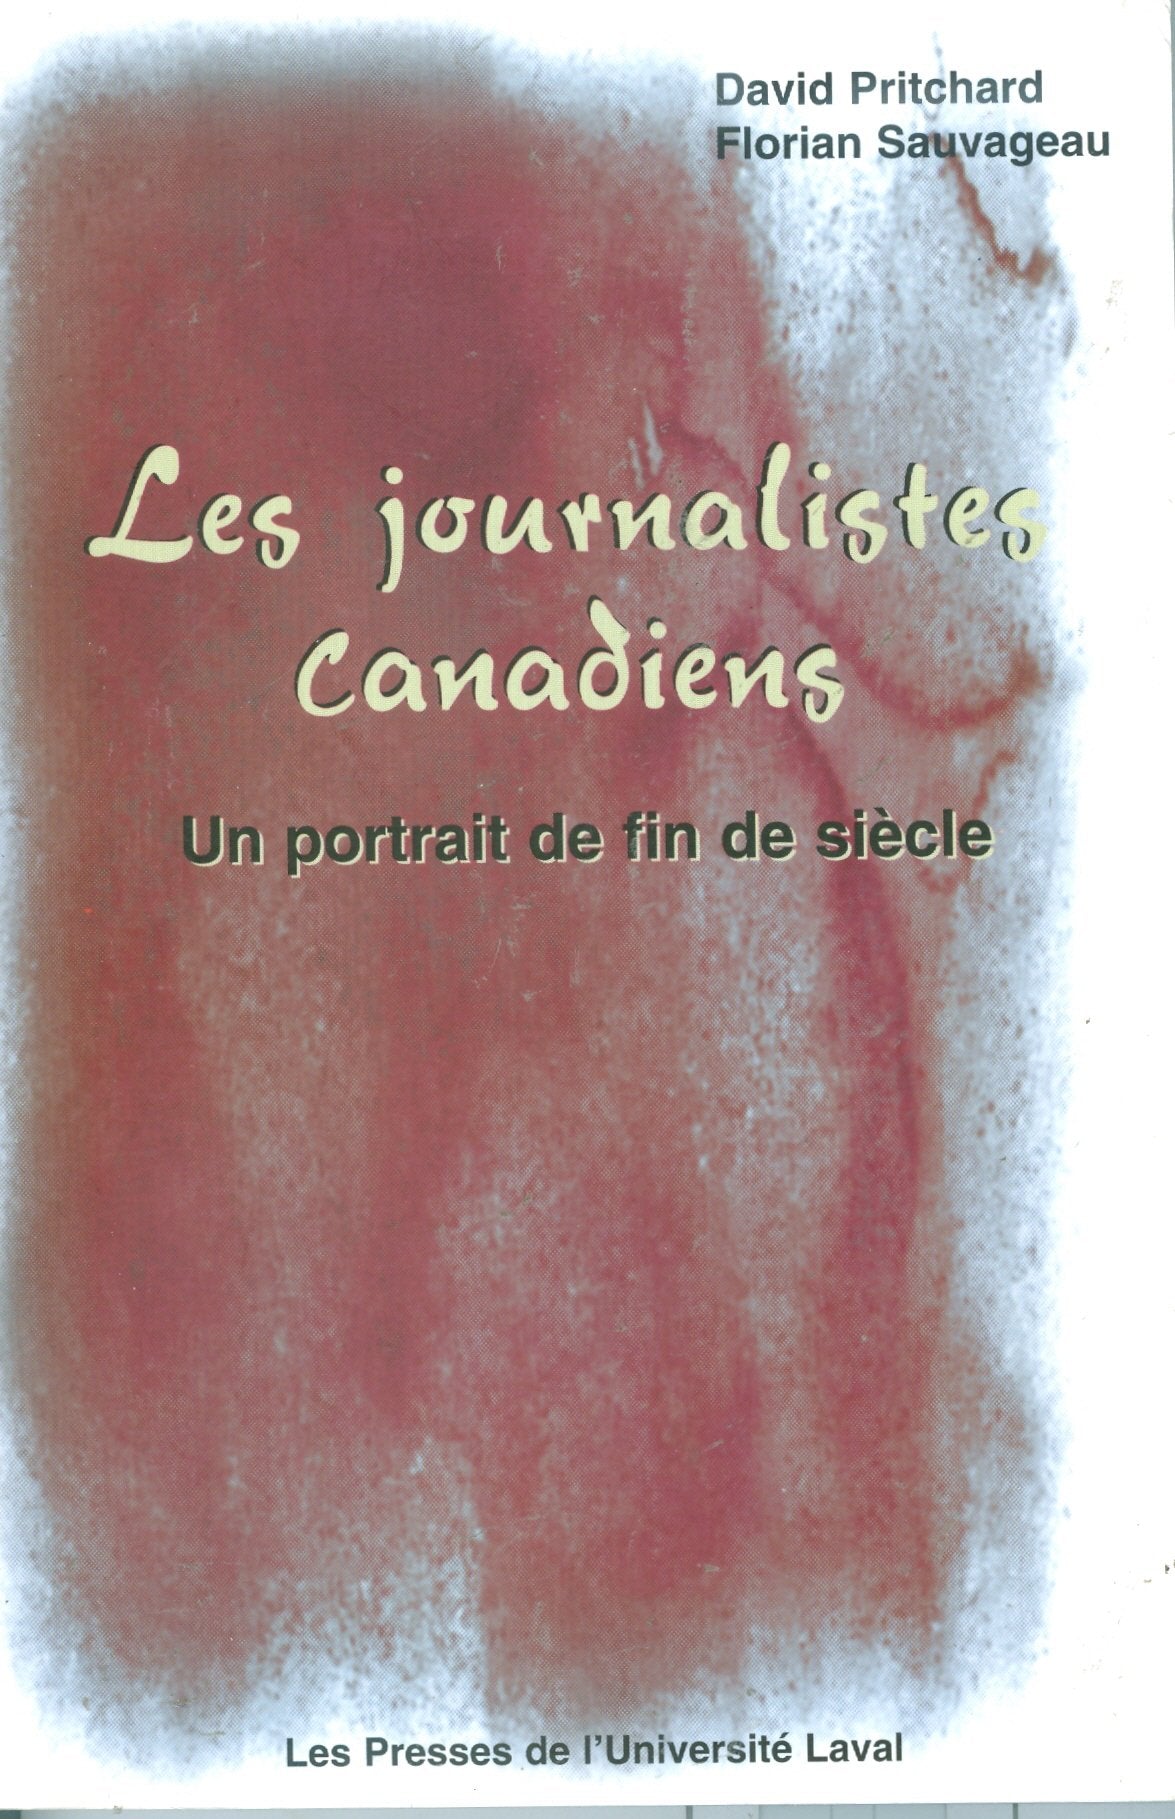 Livre ISBN 276377685X Les journalistes canadiens (David Pritchard)